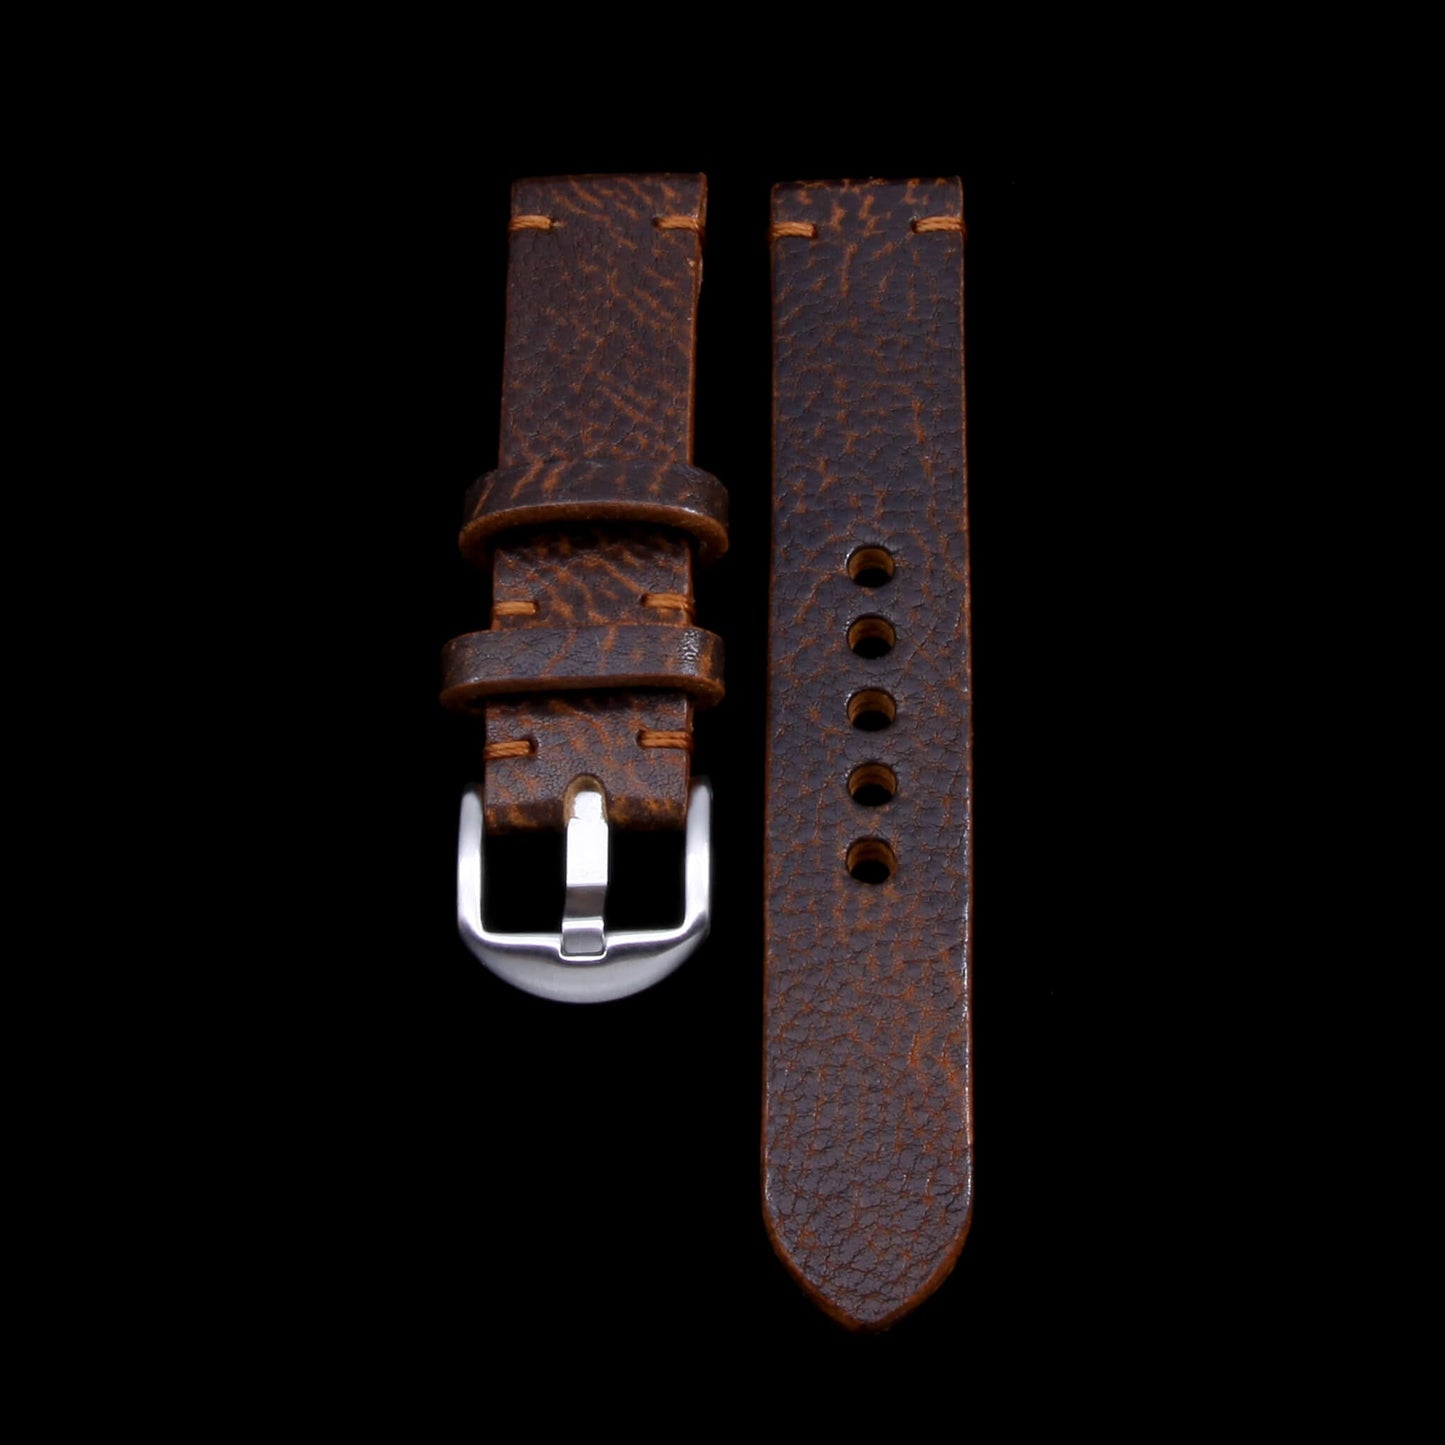 Rugged elegance: 2-piece minimalist Apple Watch strap in Gobi Cognac Italian leather, handcrafted by Cozy Handmade.